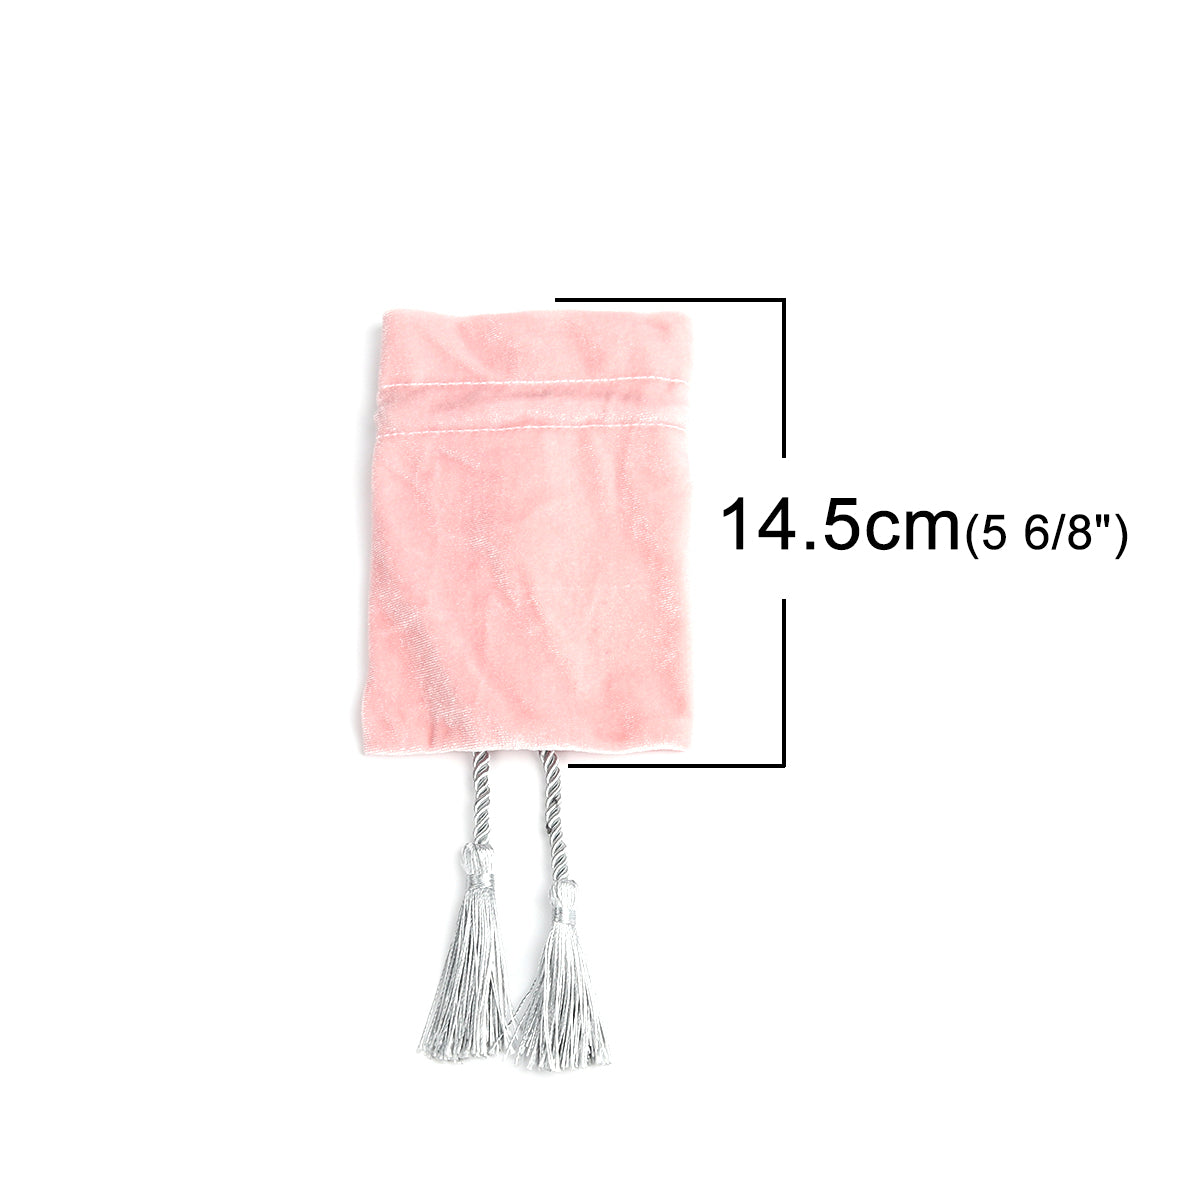 Pink velvet pouch bag with tassel rope